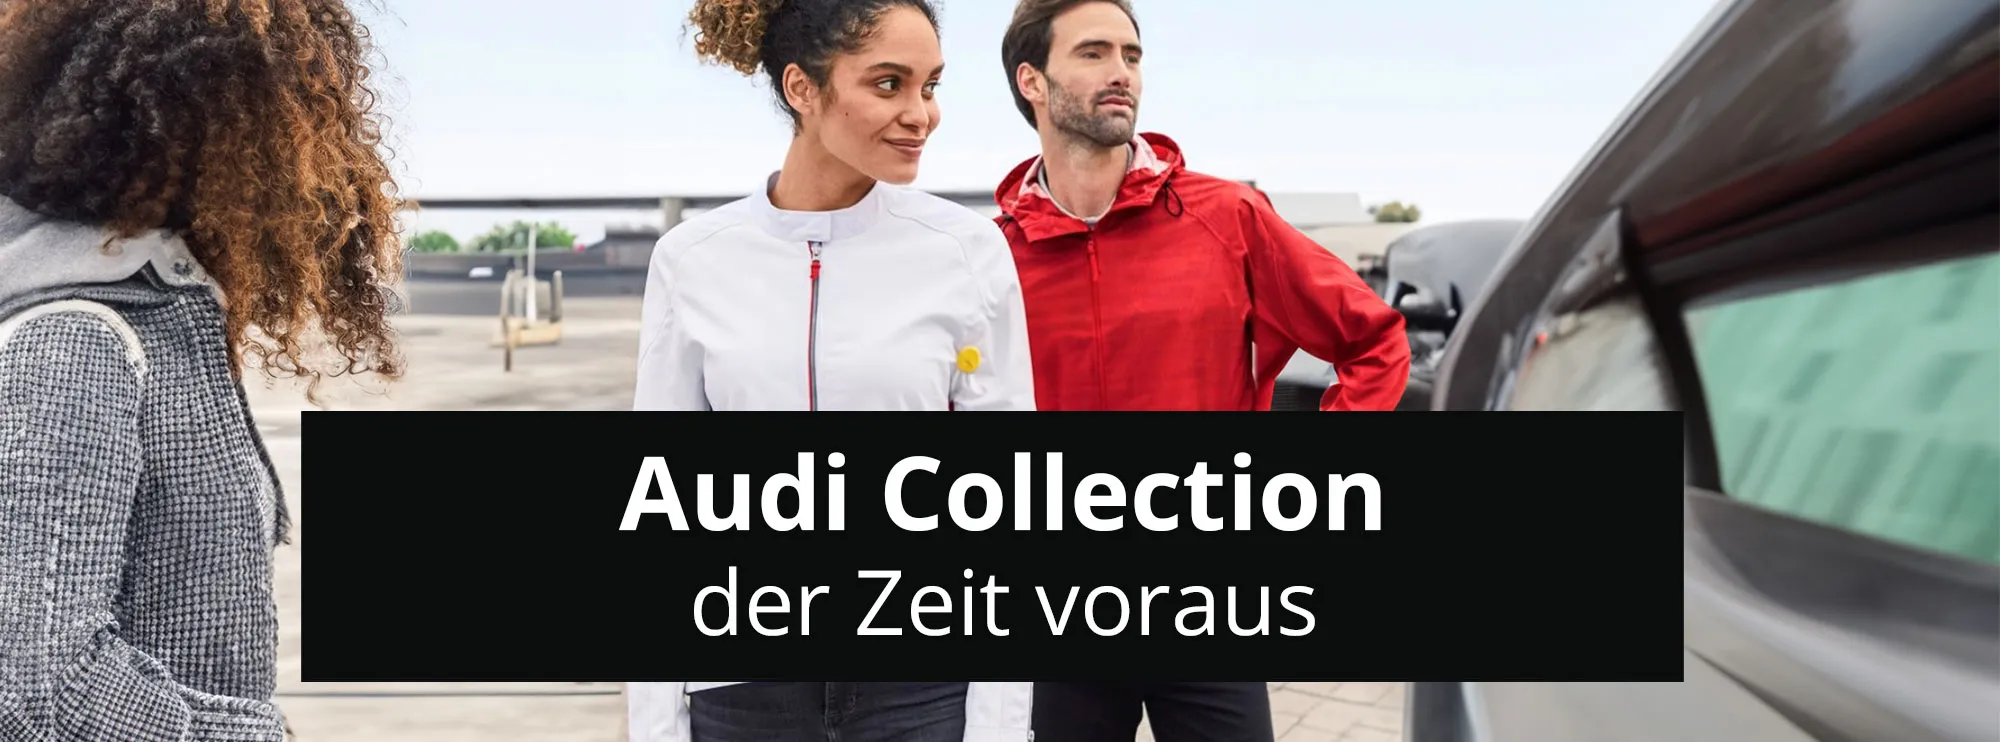 Audi collection rosier online shop header